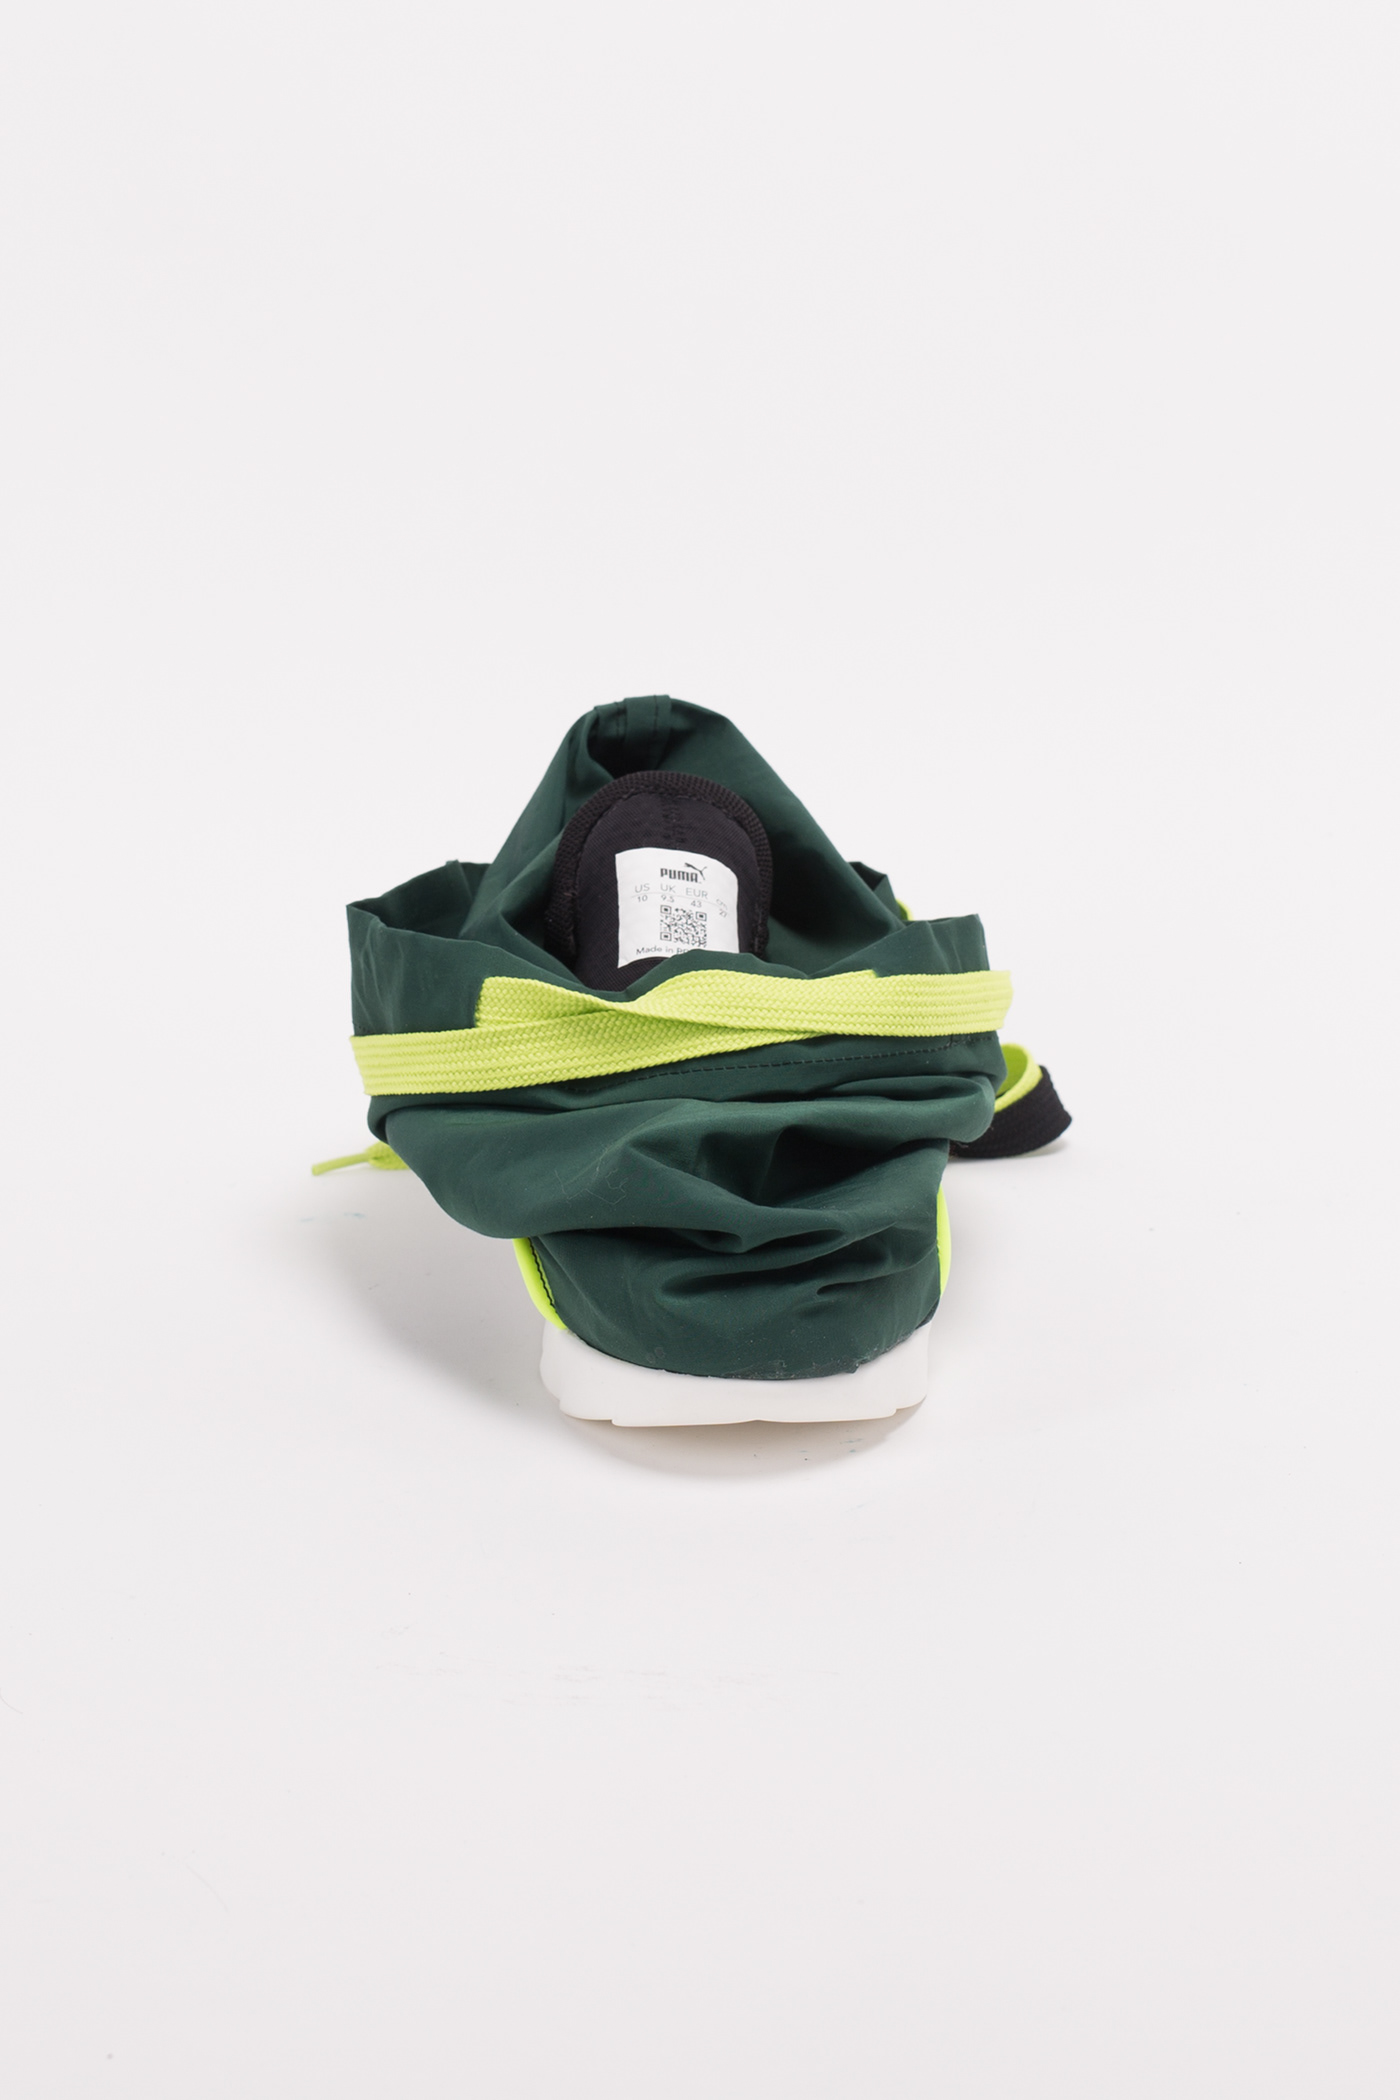 agender nogender genderfluid fluidity concept design art footwear futuristic innovation